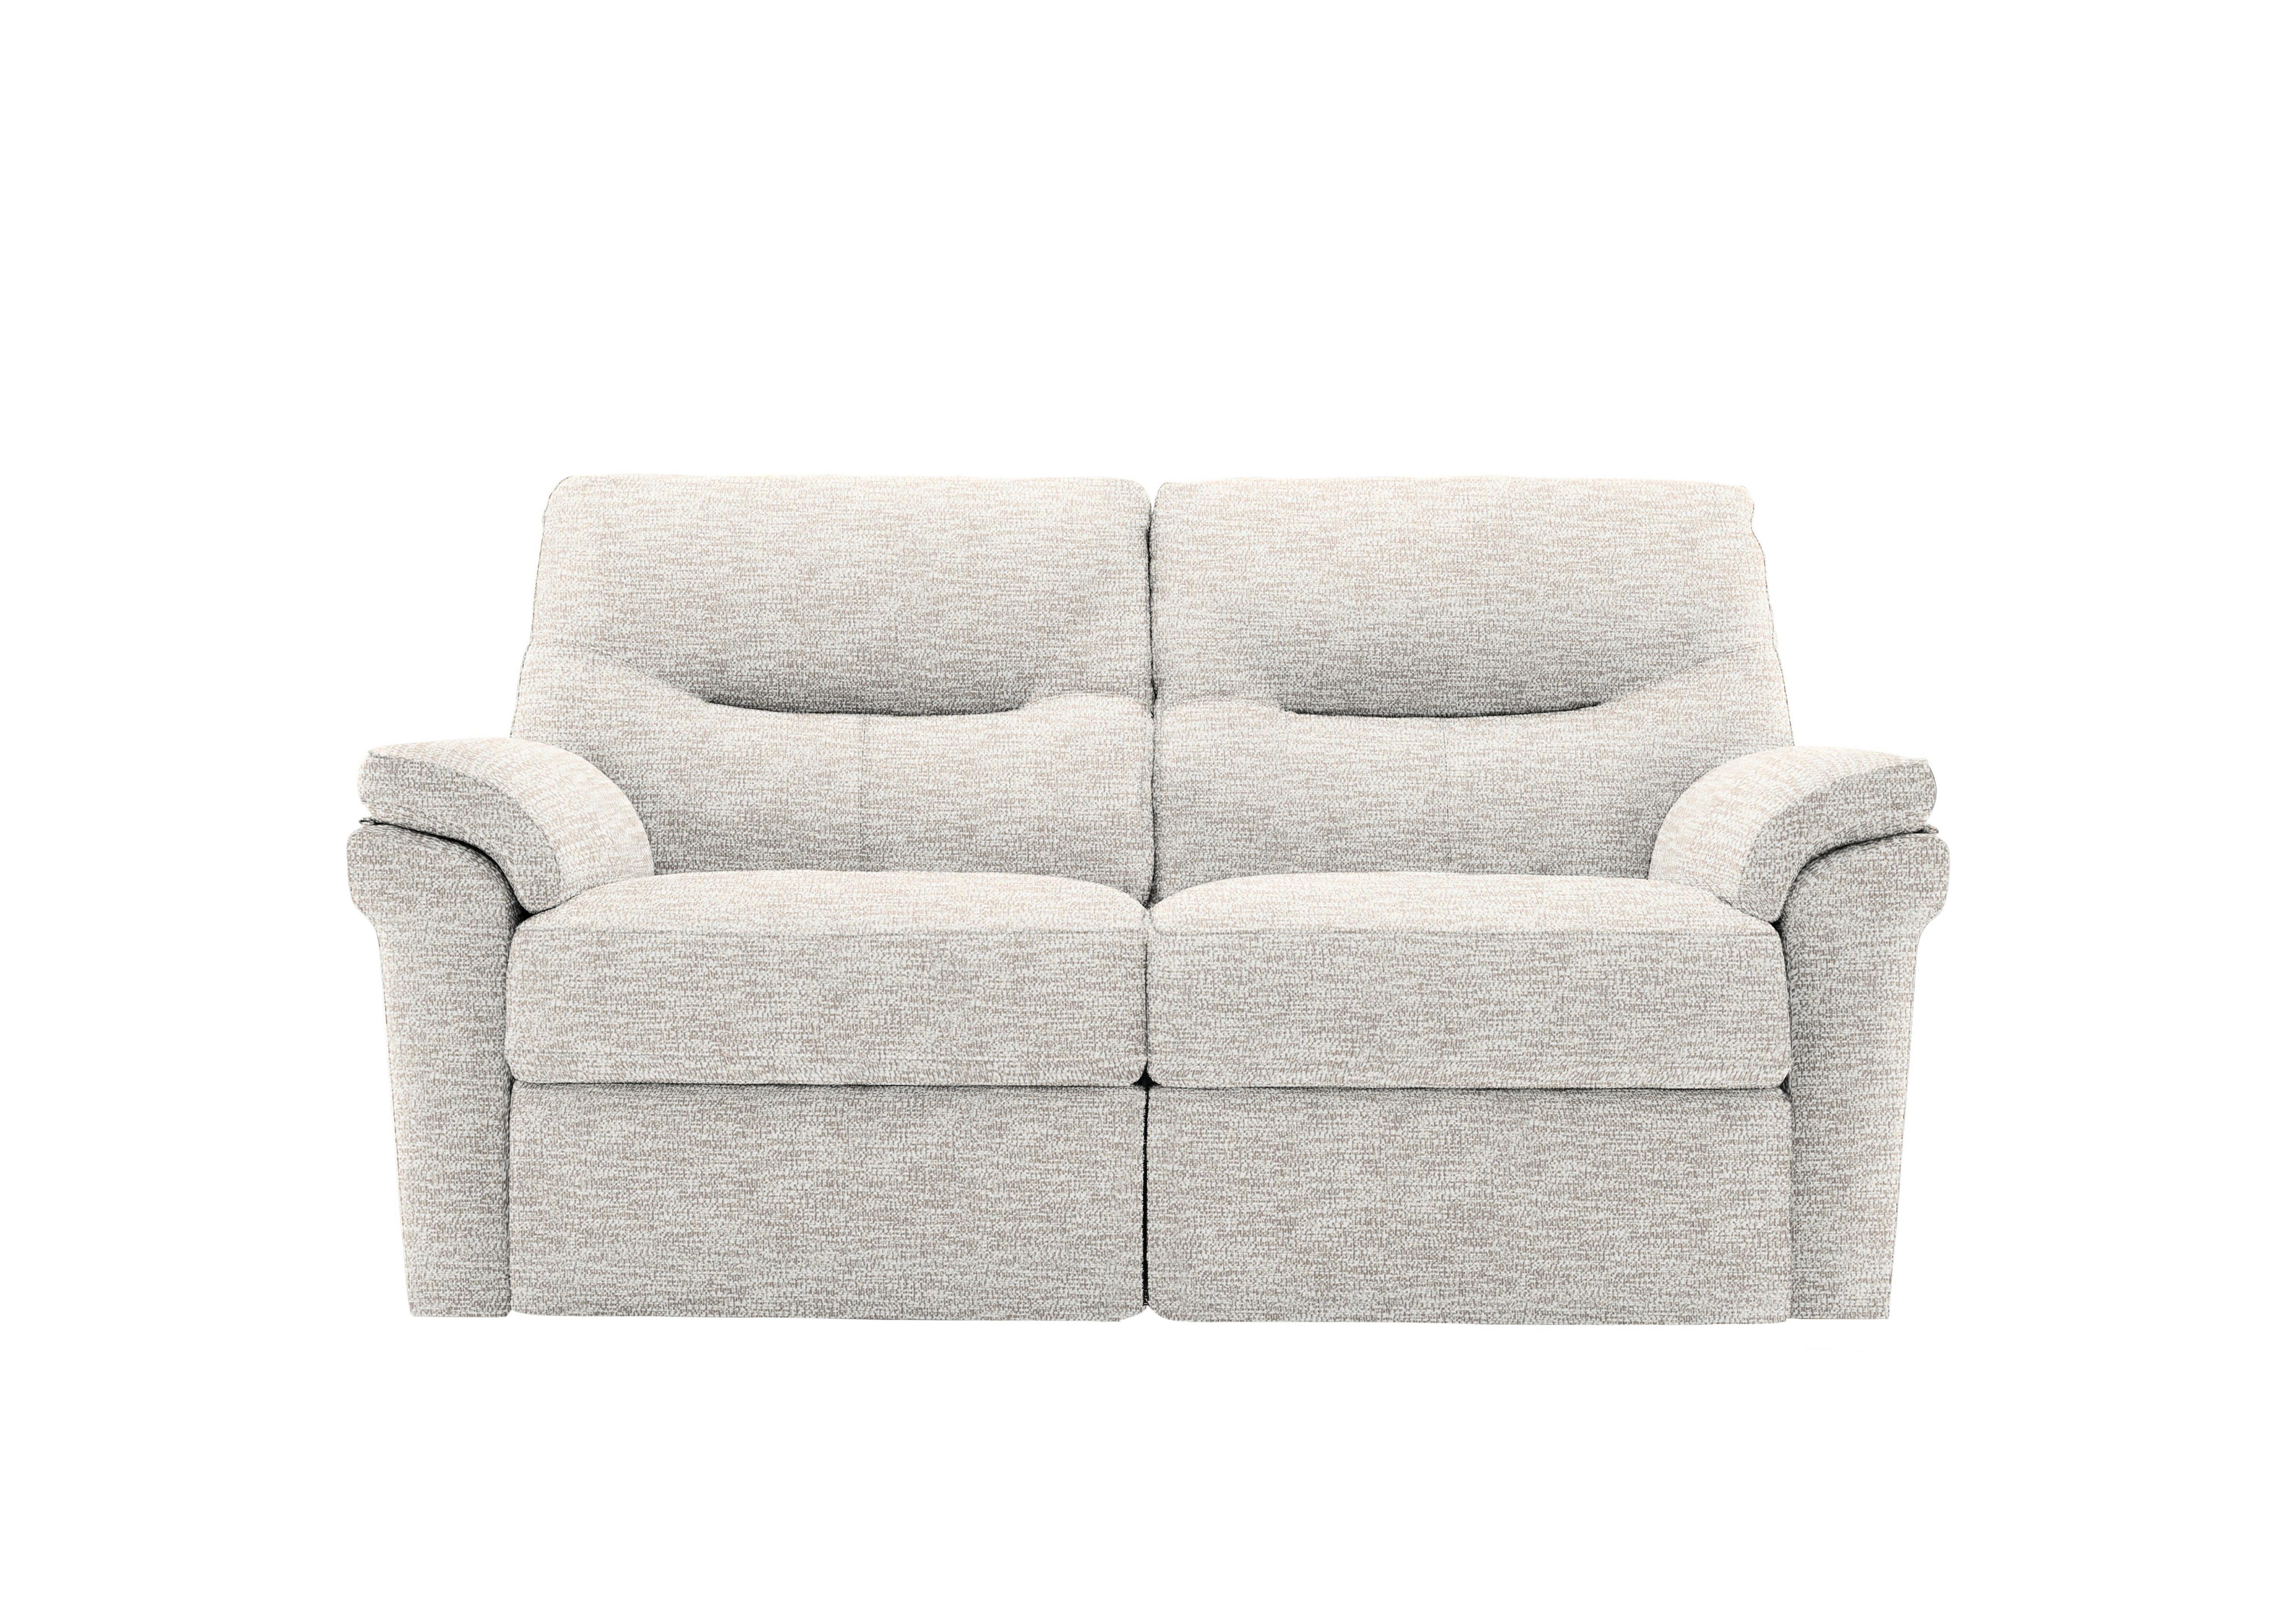 Seattle 2 Seater Fabric Sofa in C931 Rush Cream on Furniture Village